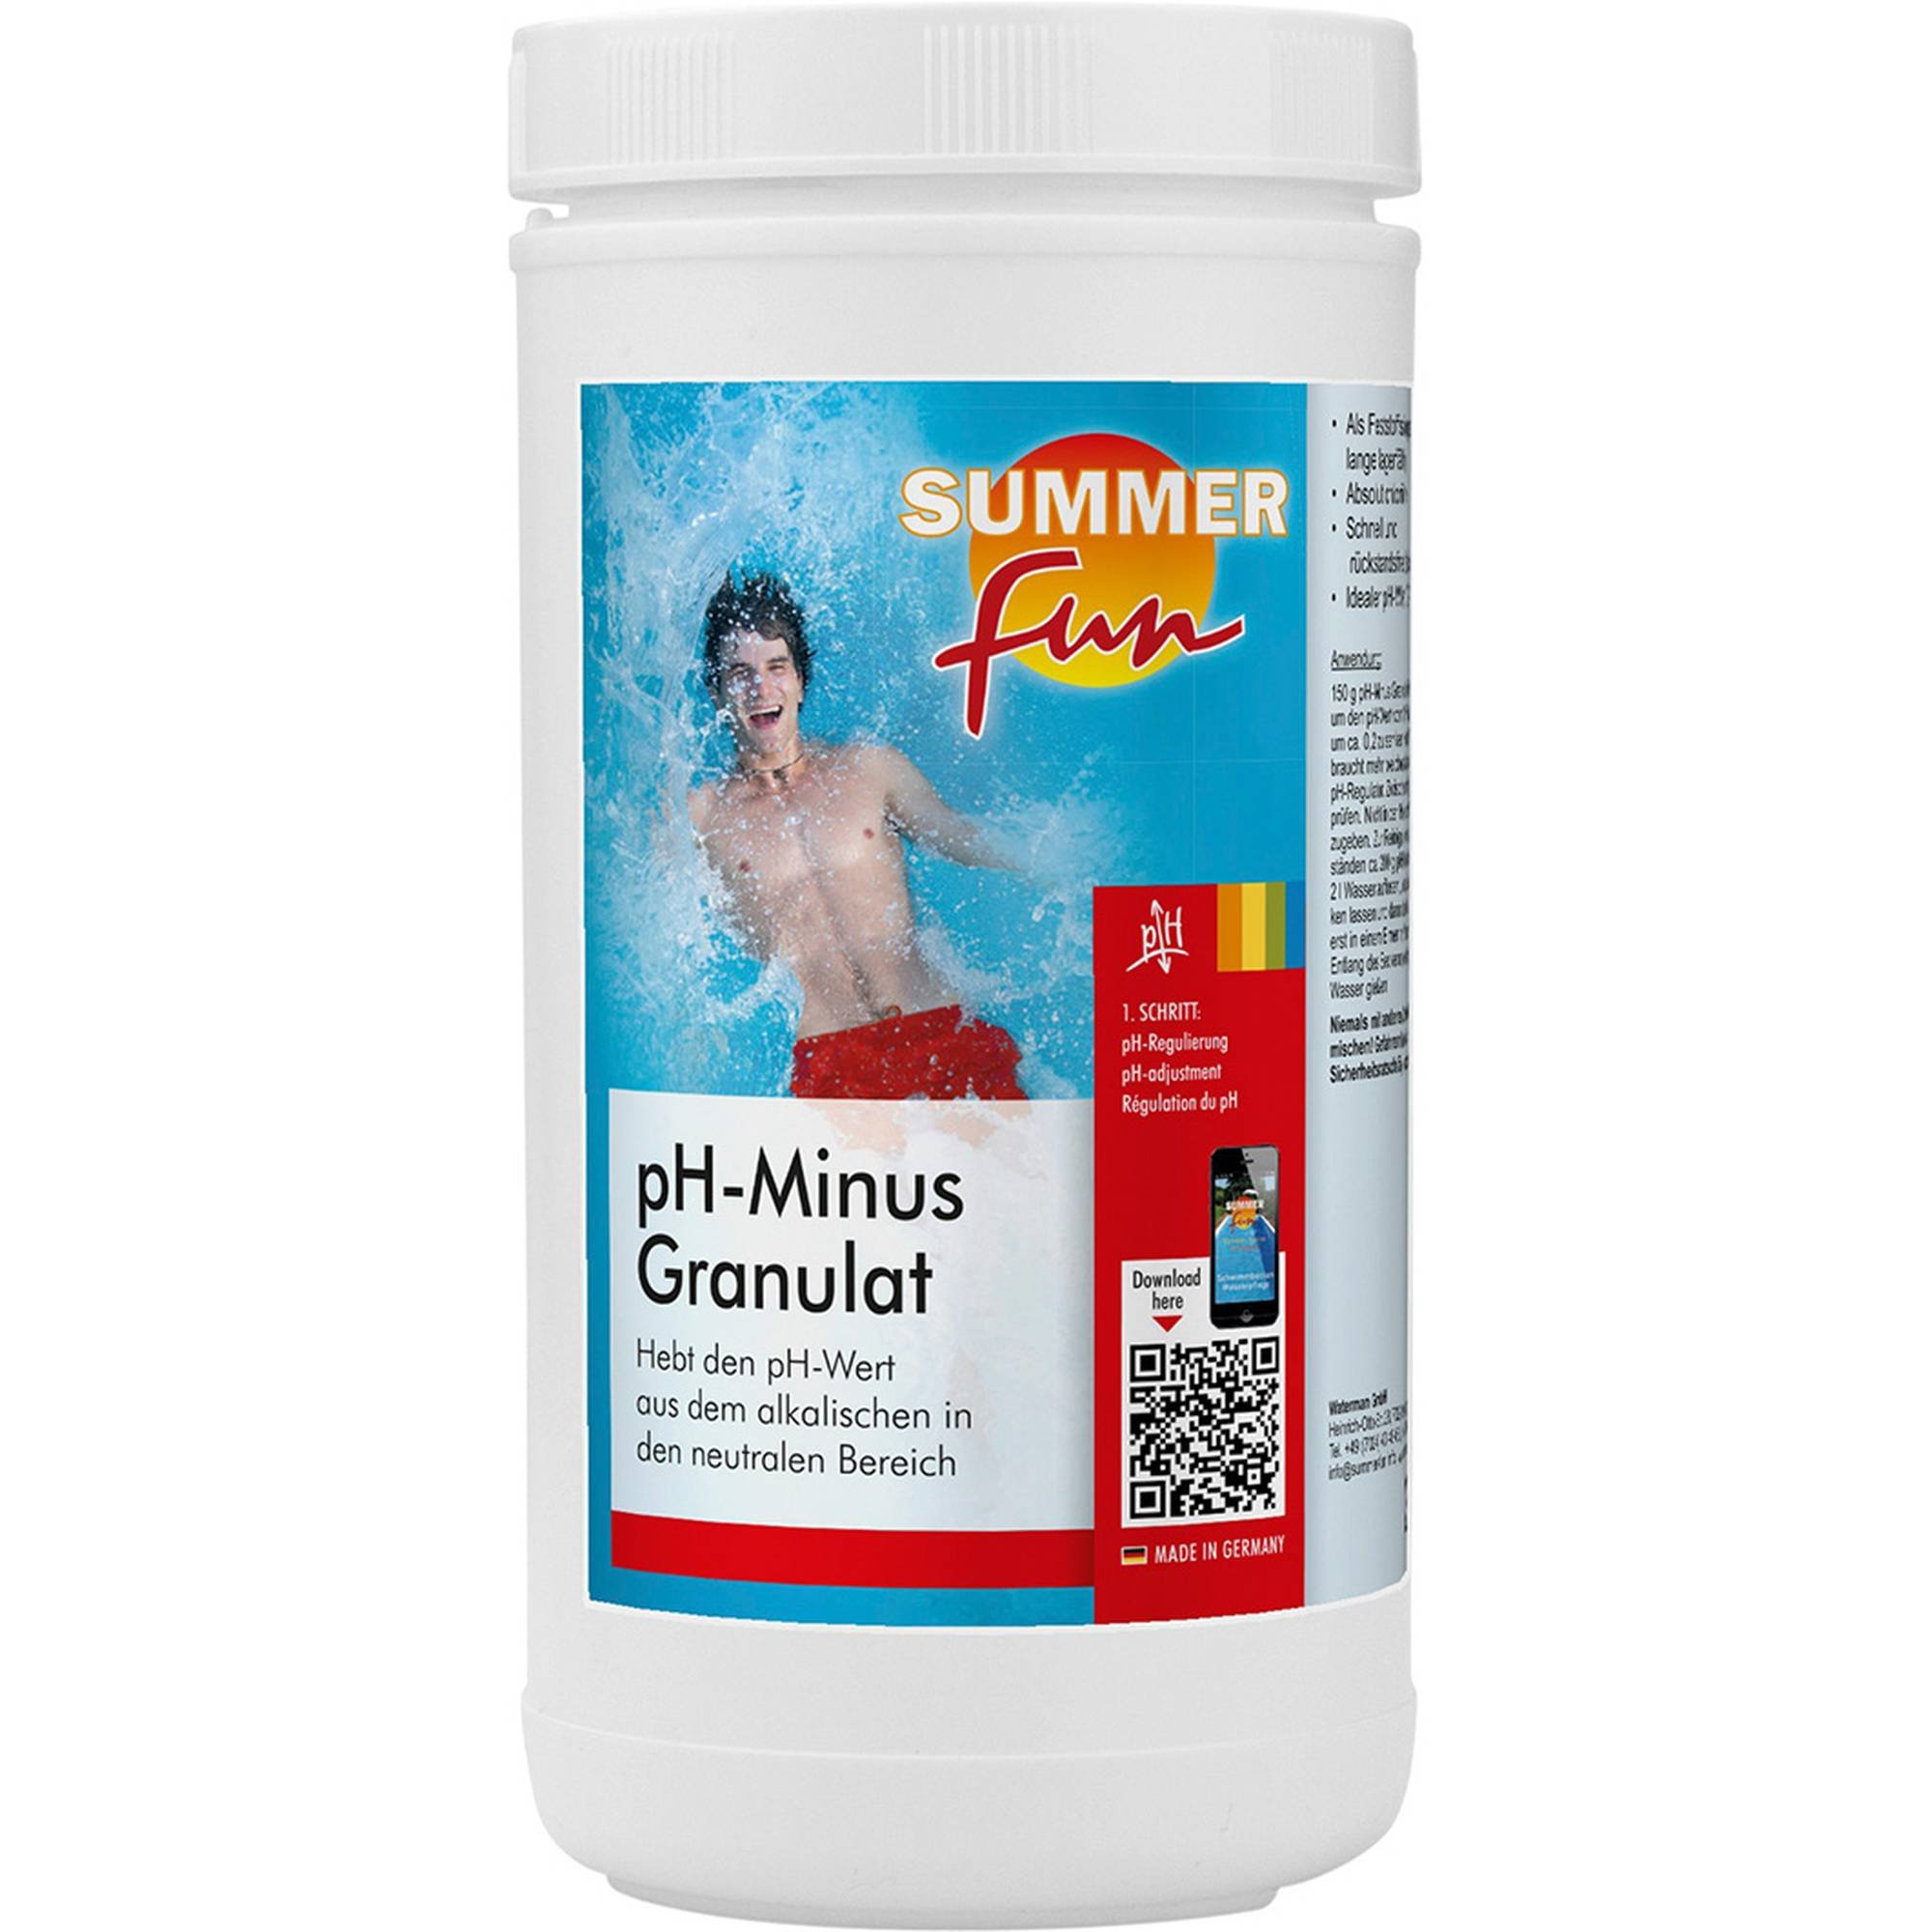 Summer Fun - pH-Minus Granulat, 1,8 kg